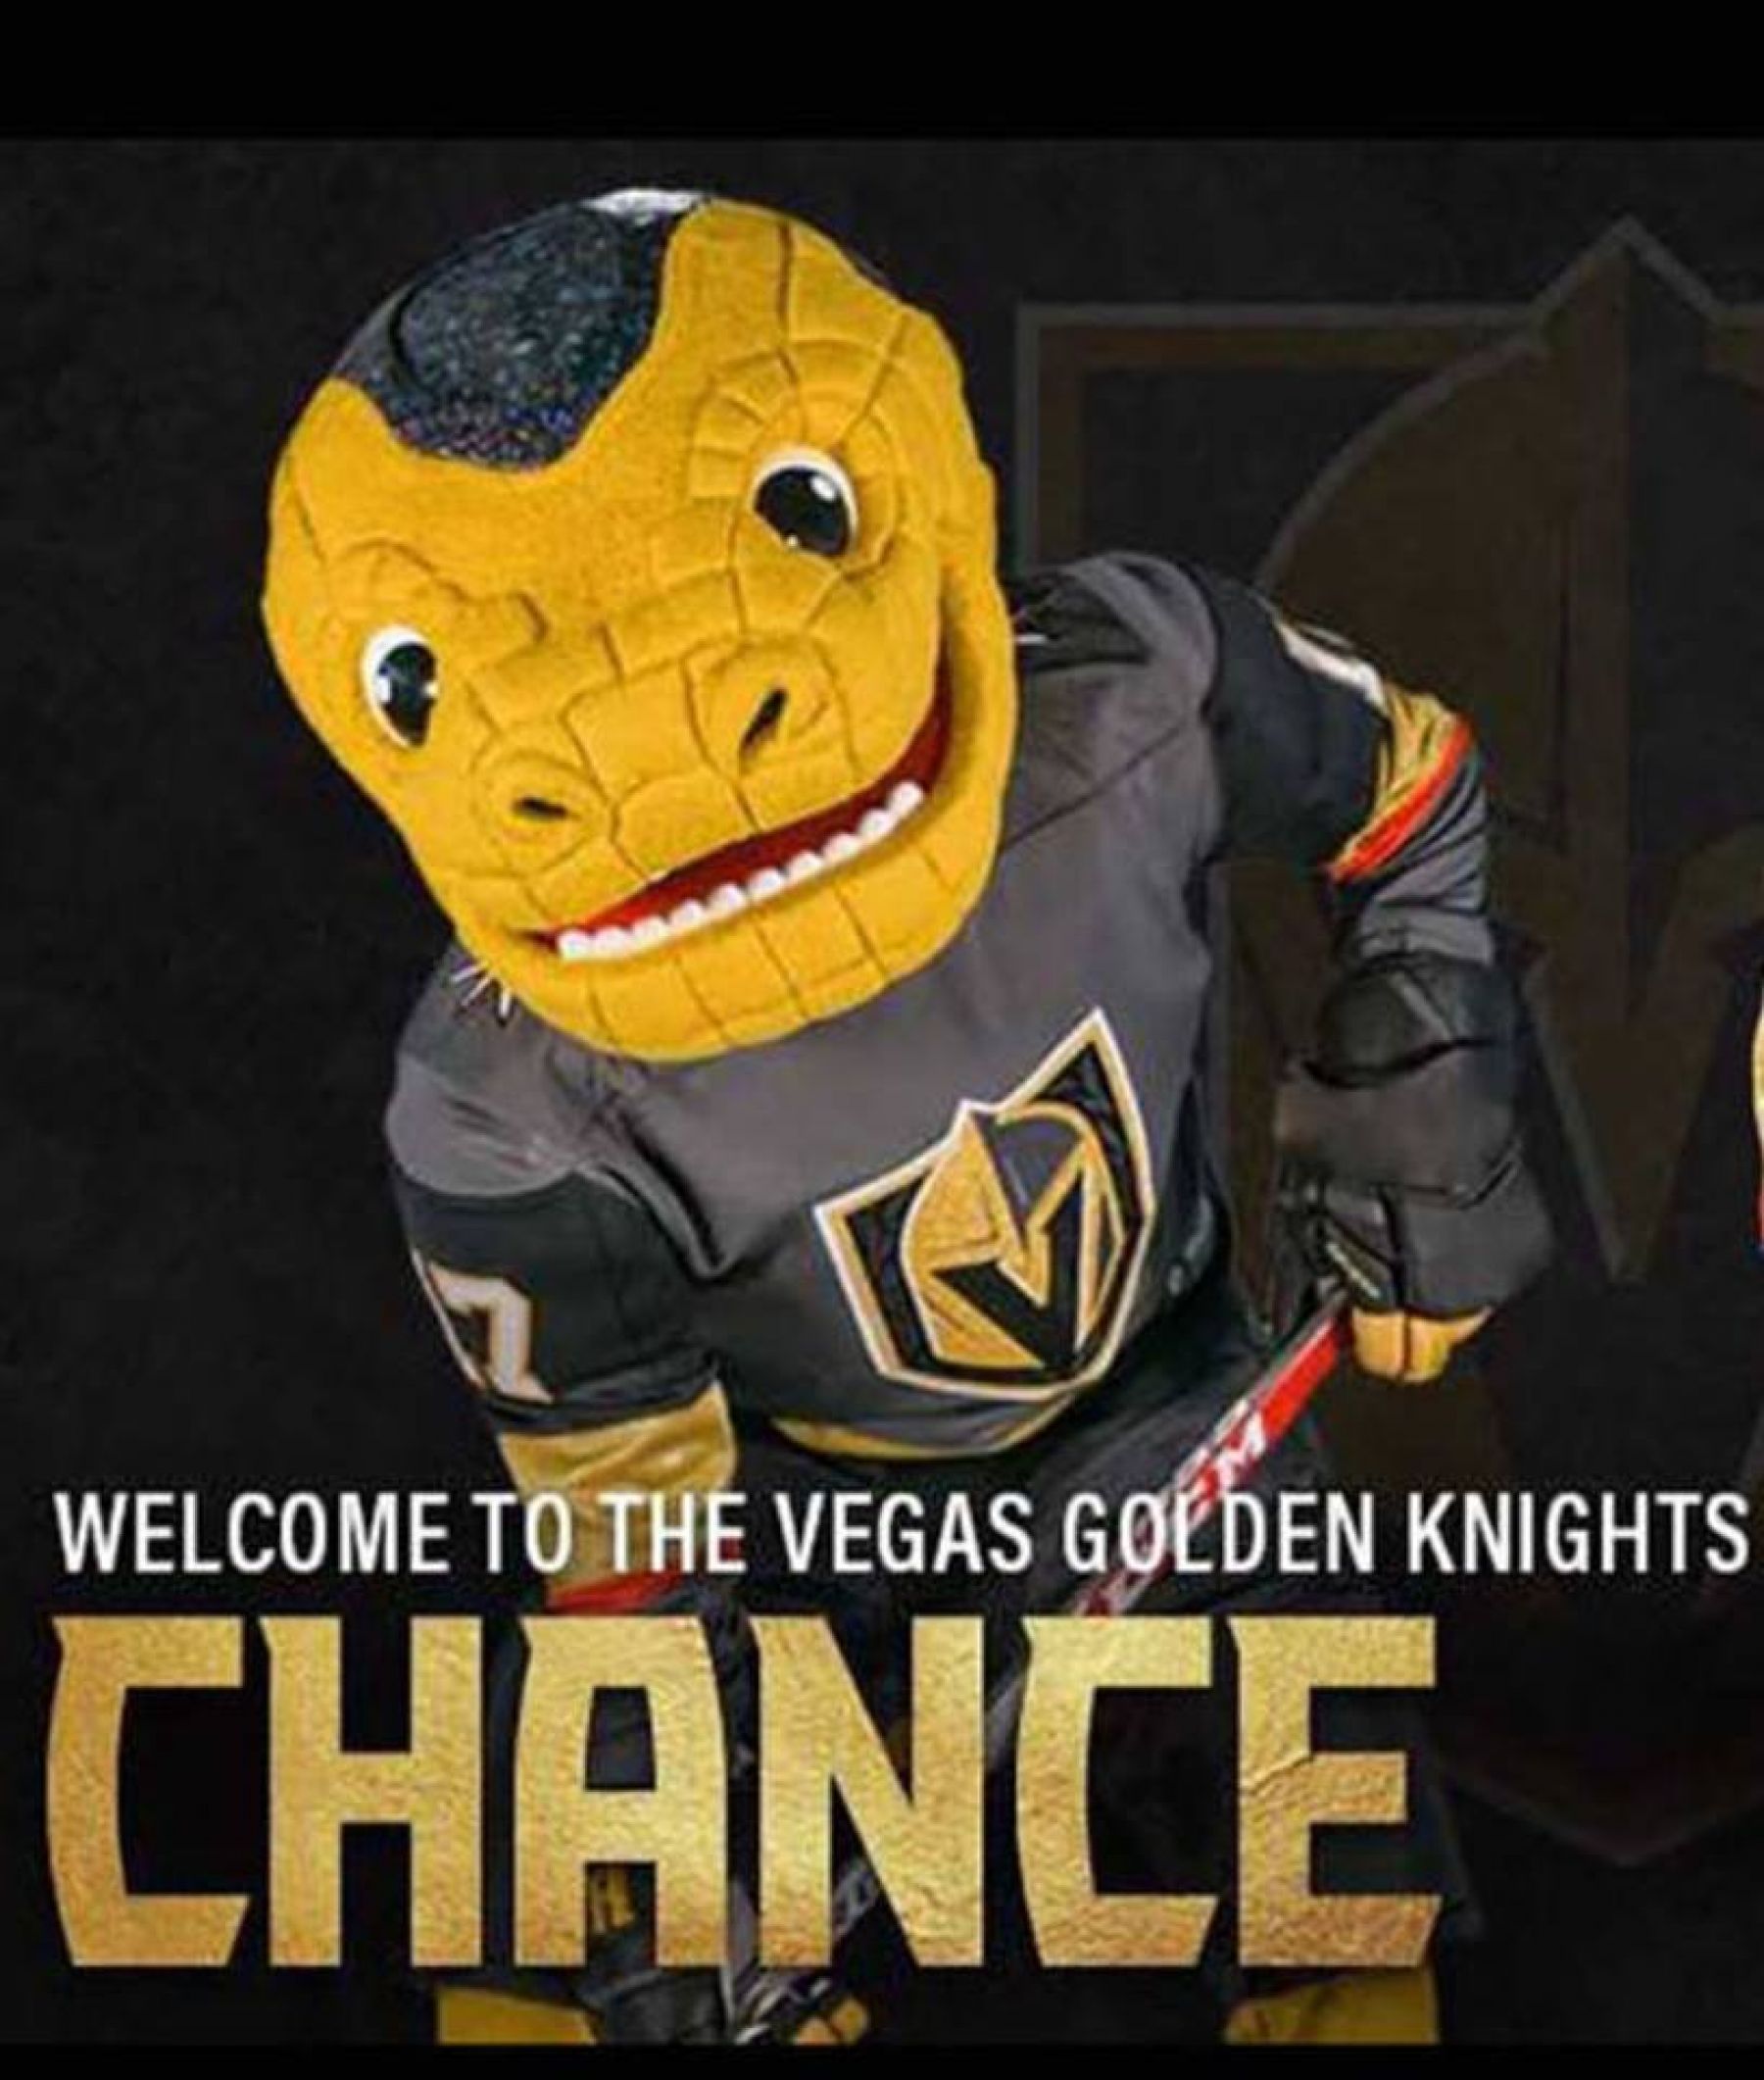 Vegas Golden Knights mascot Chance (left), Barney the Dinosaur